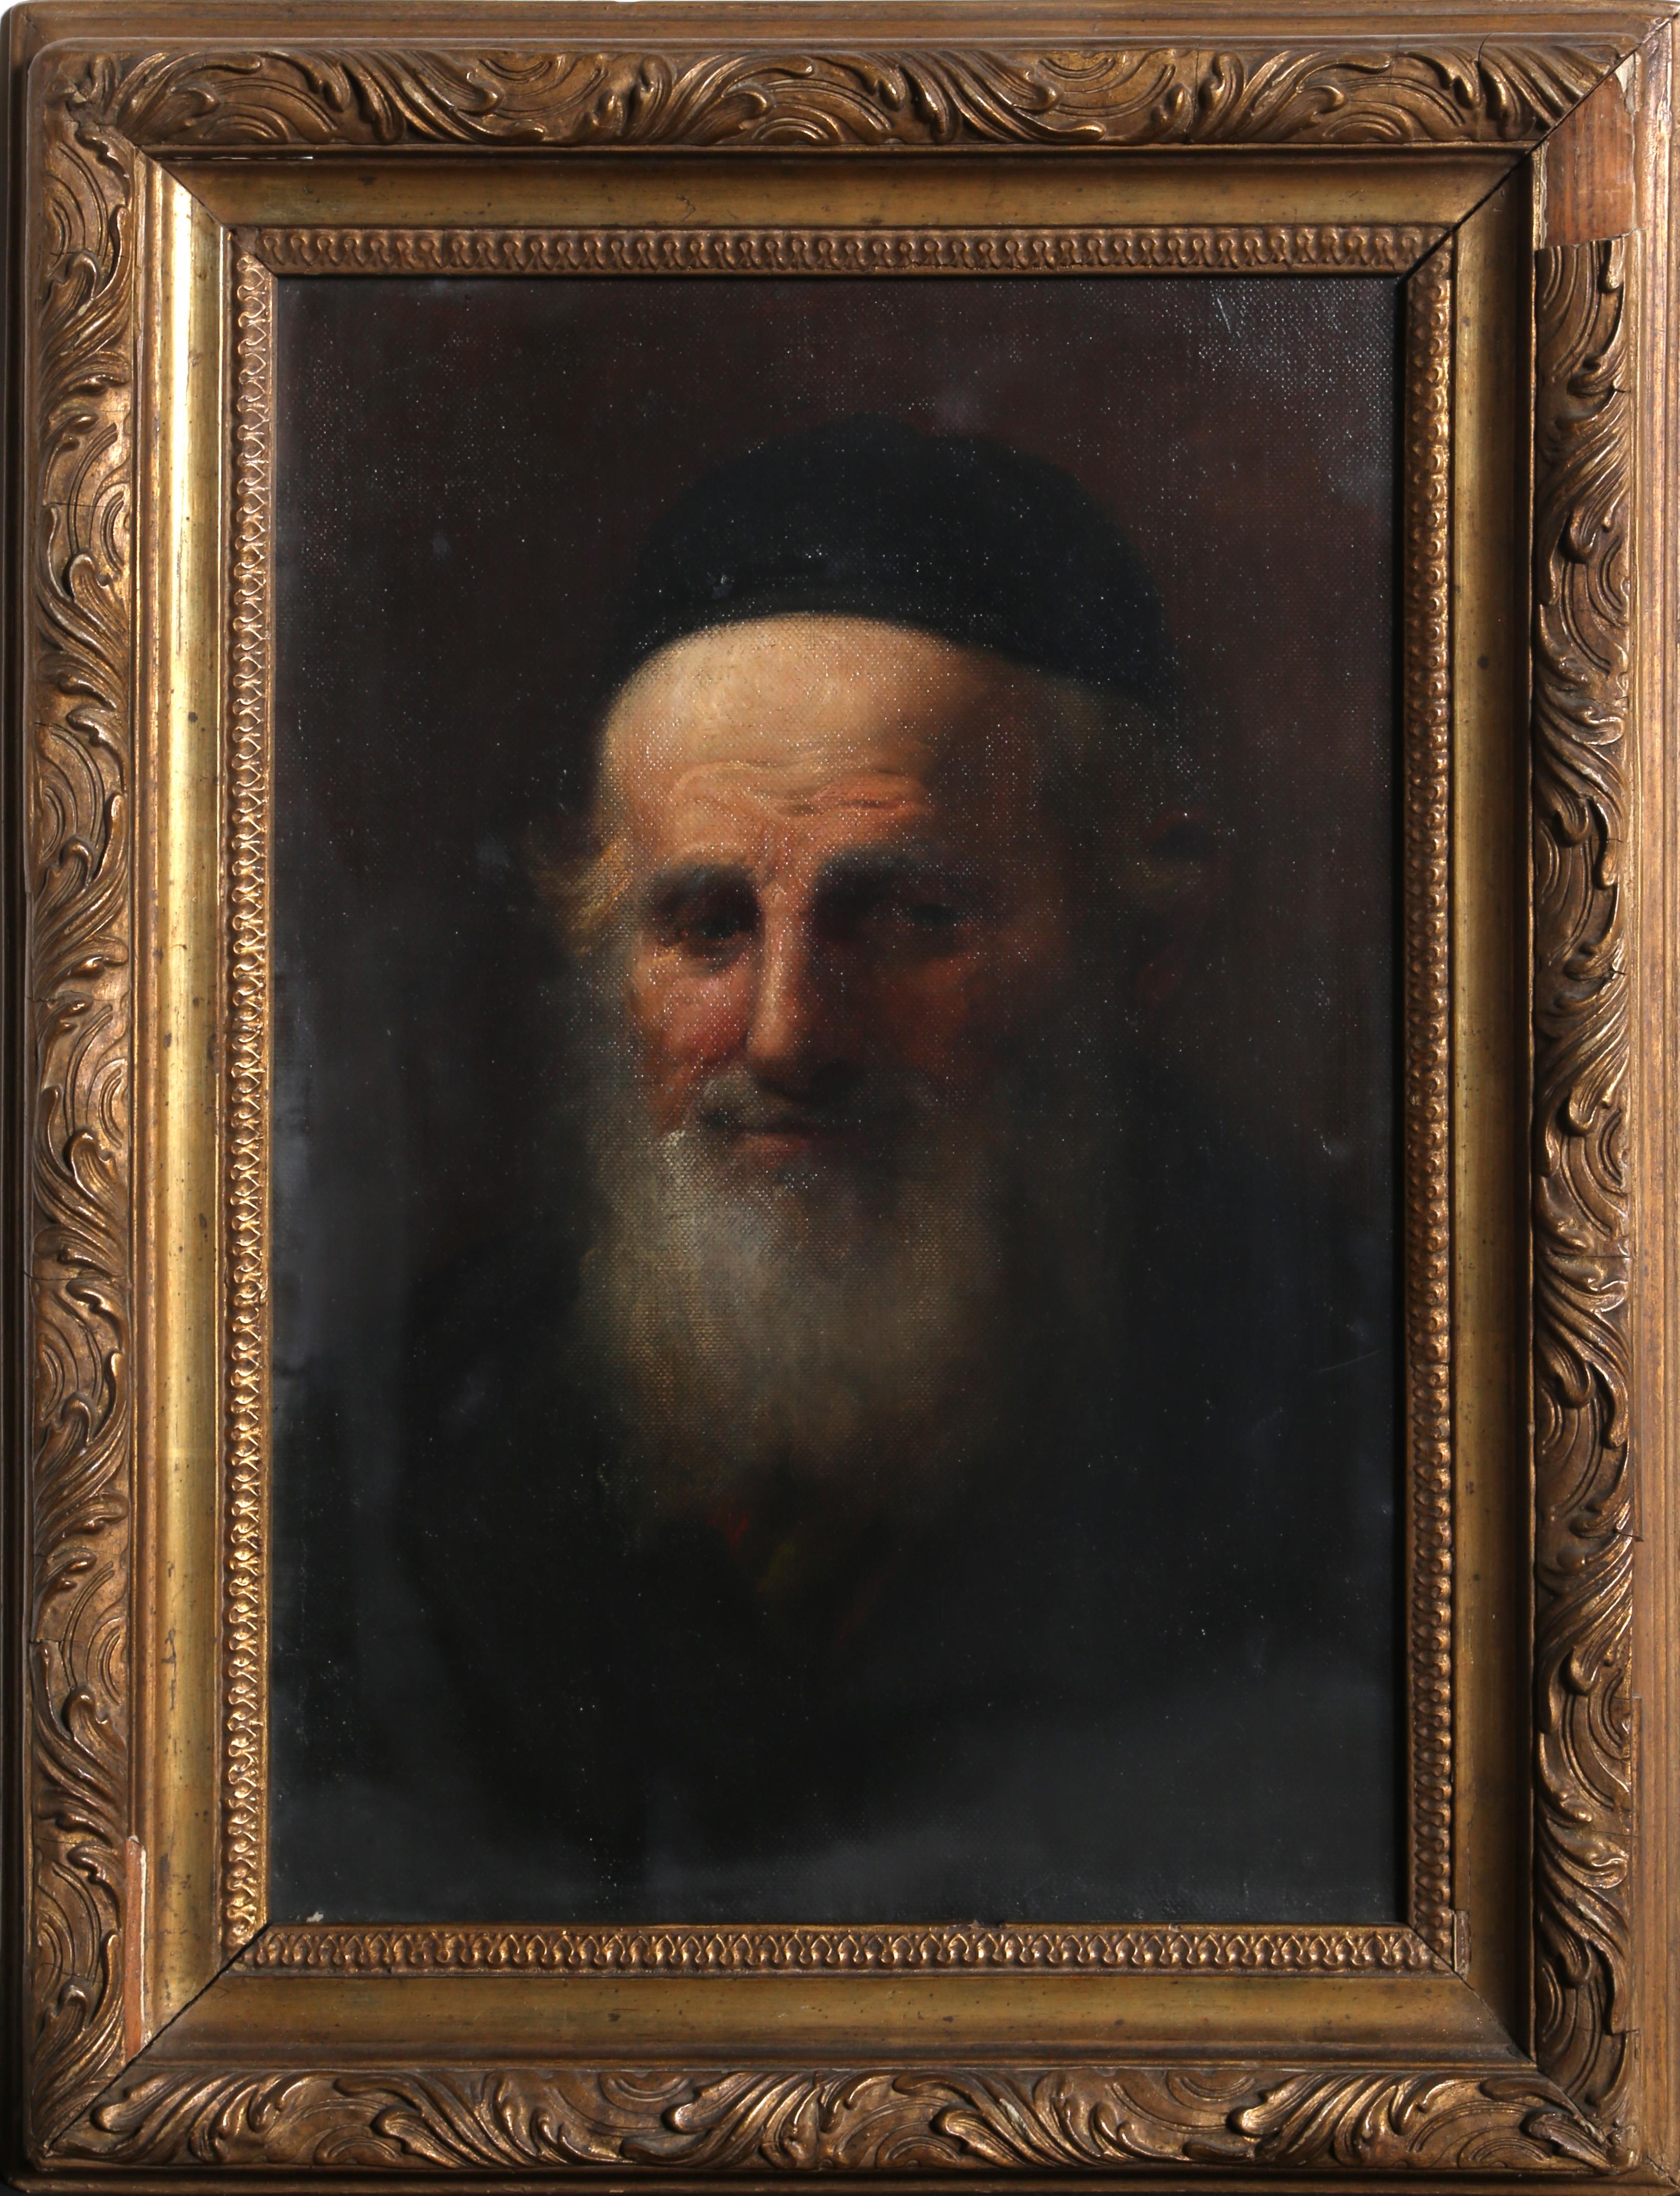 Portrait of a Rabbi, Framed Judaica Oil Painting